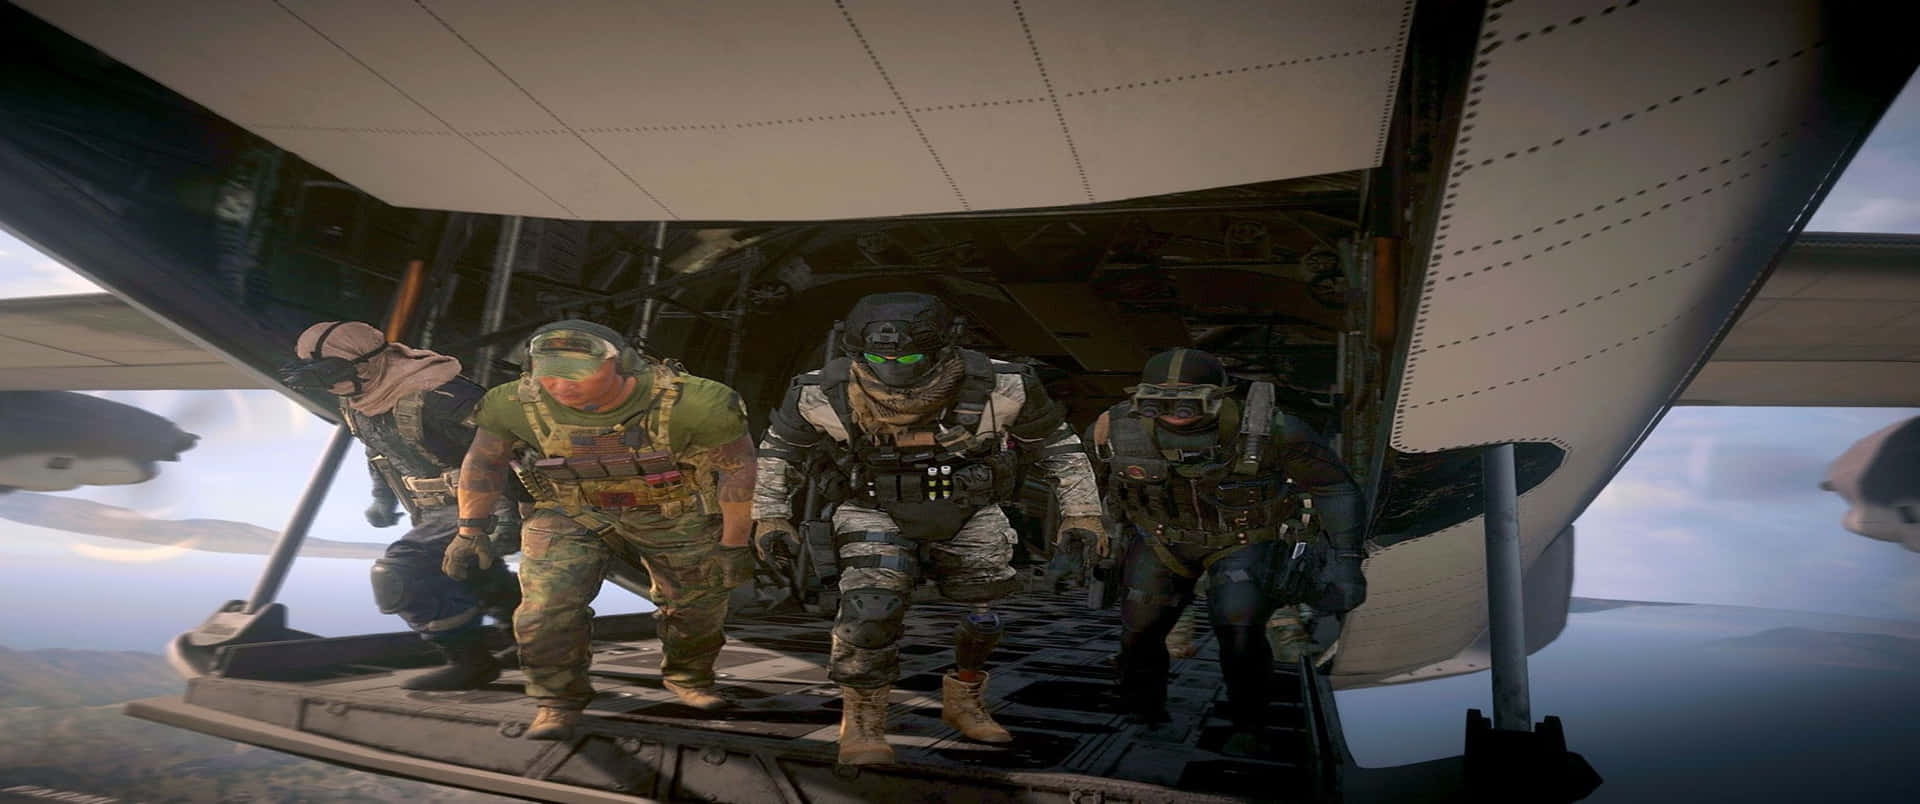 3440x1440pcall Of Duty Black Ops Cold War Ramp Hintergrund